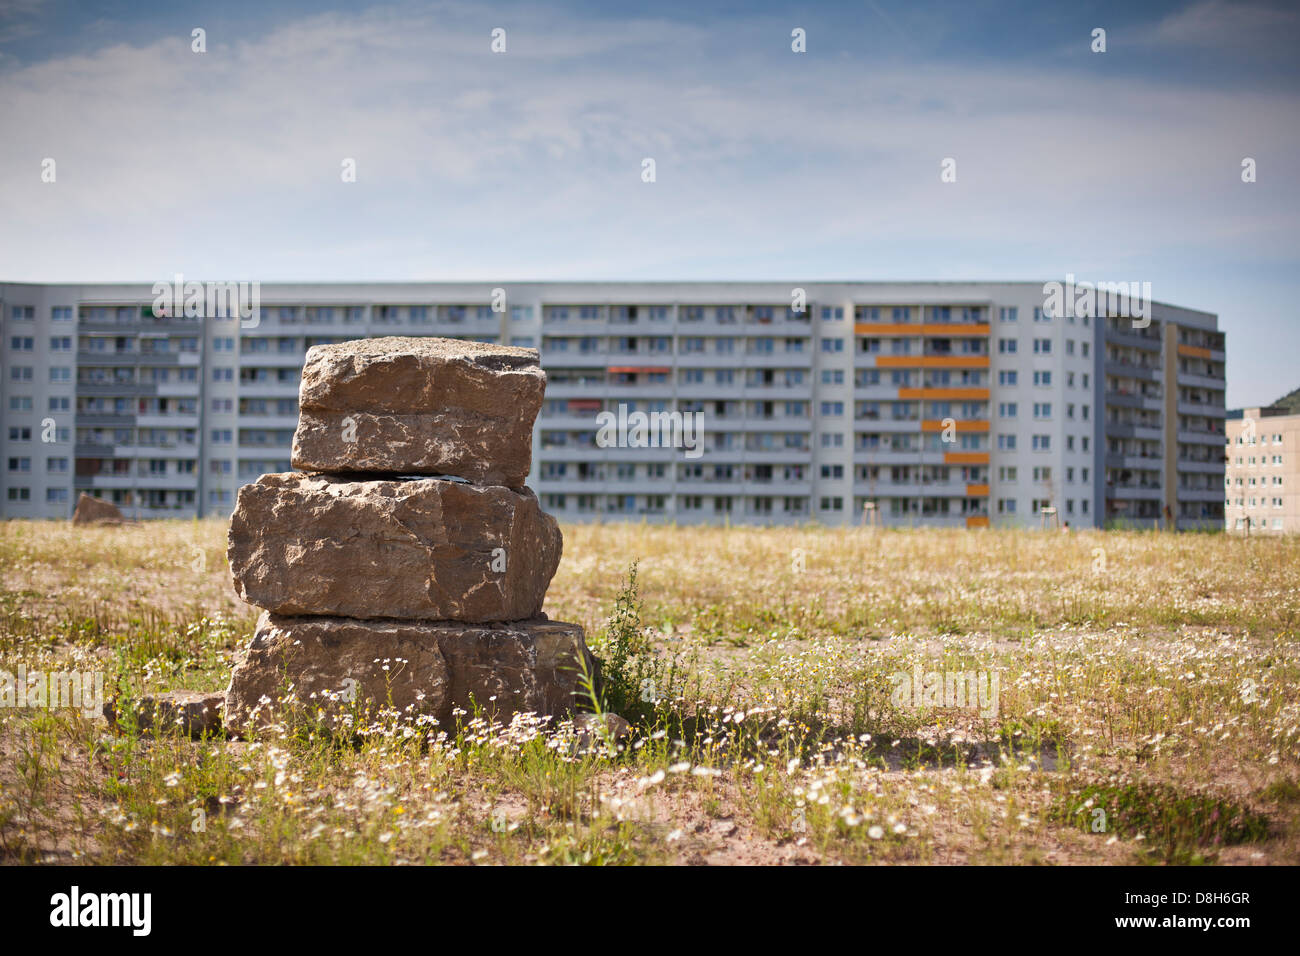 Gestapelten Steinen vor Plattenbauten, Jena, Thüringen, Deutschland Stockfoto